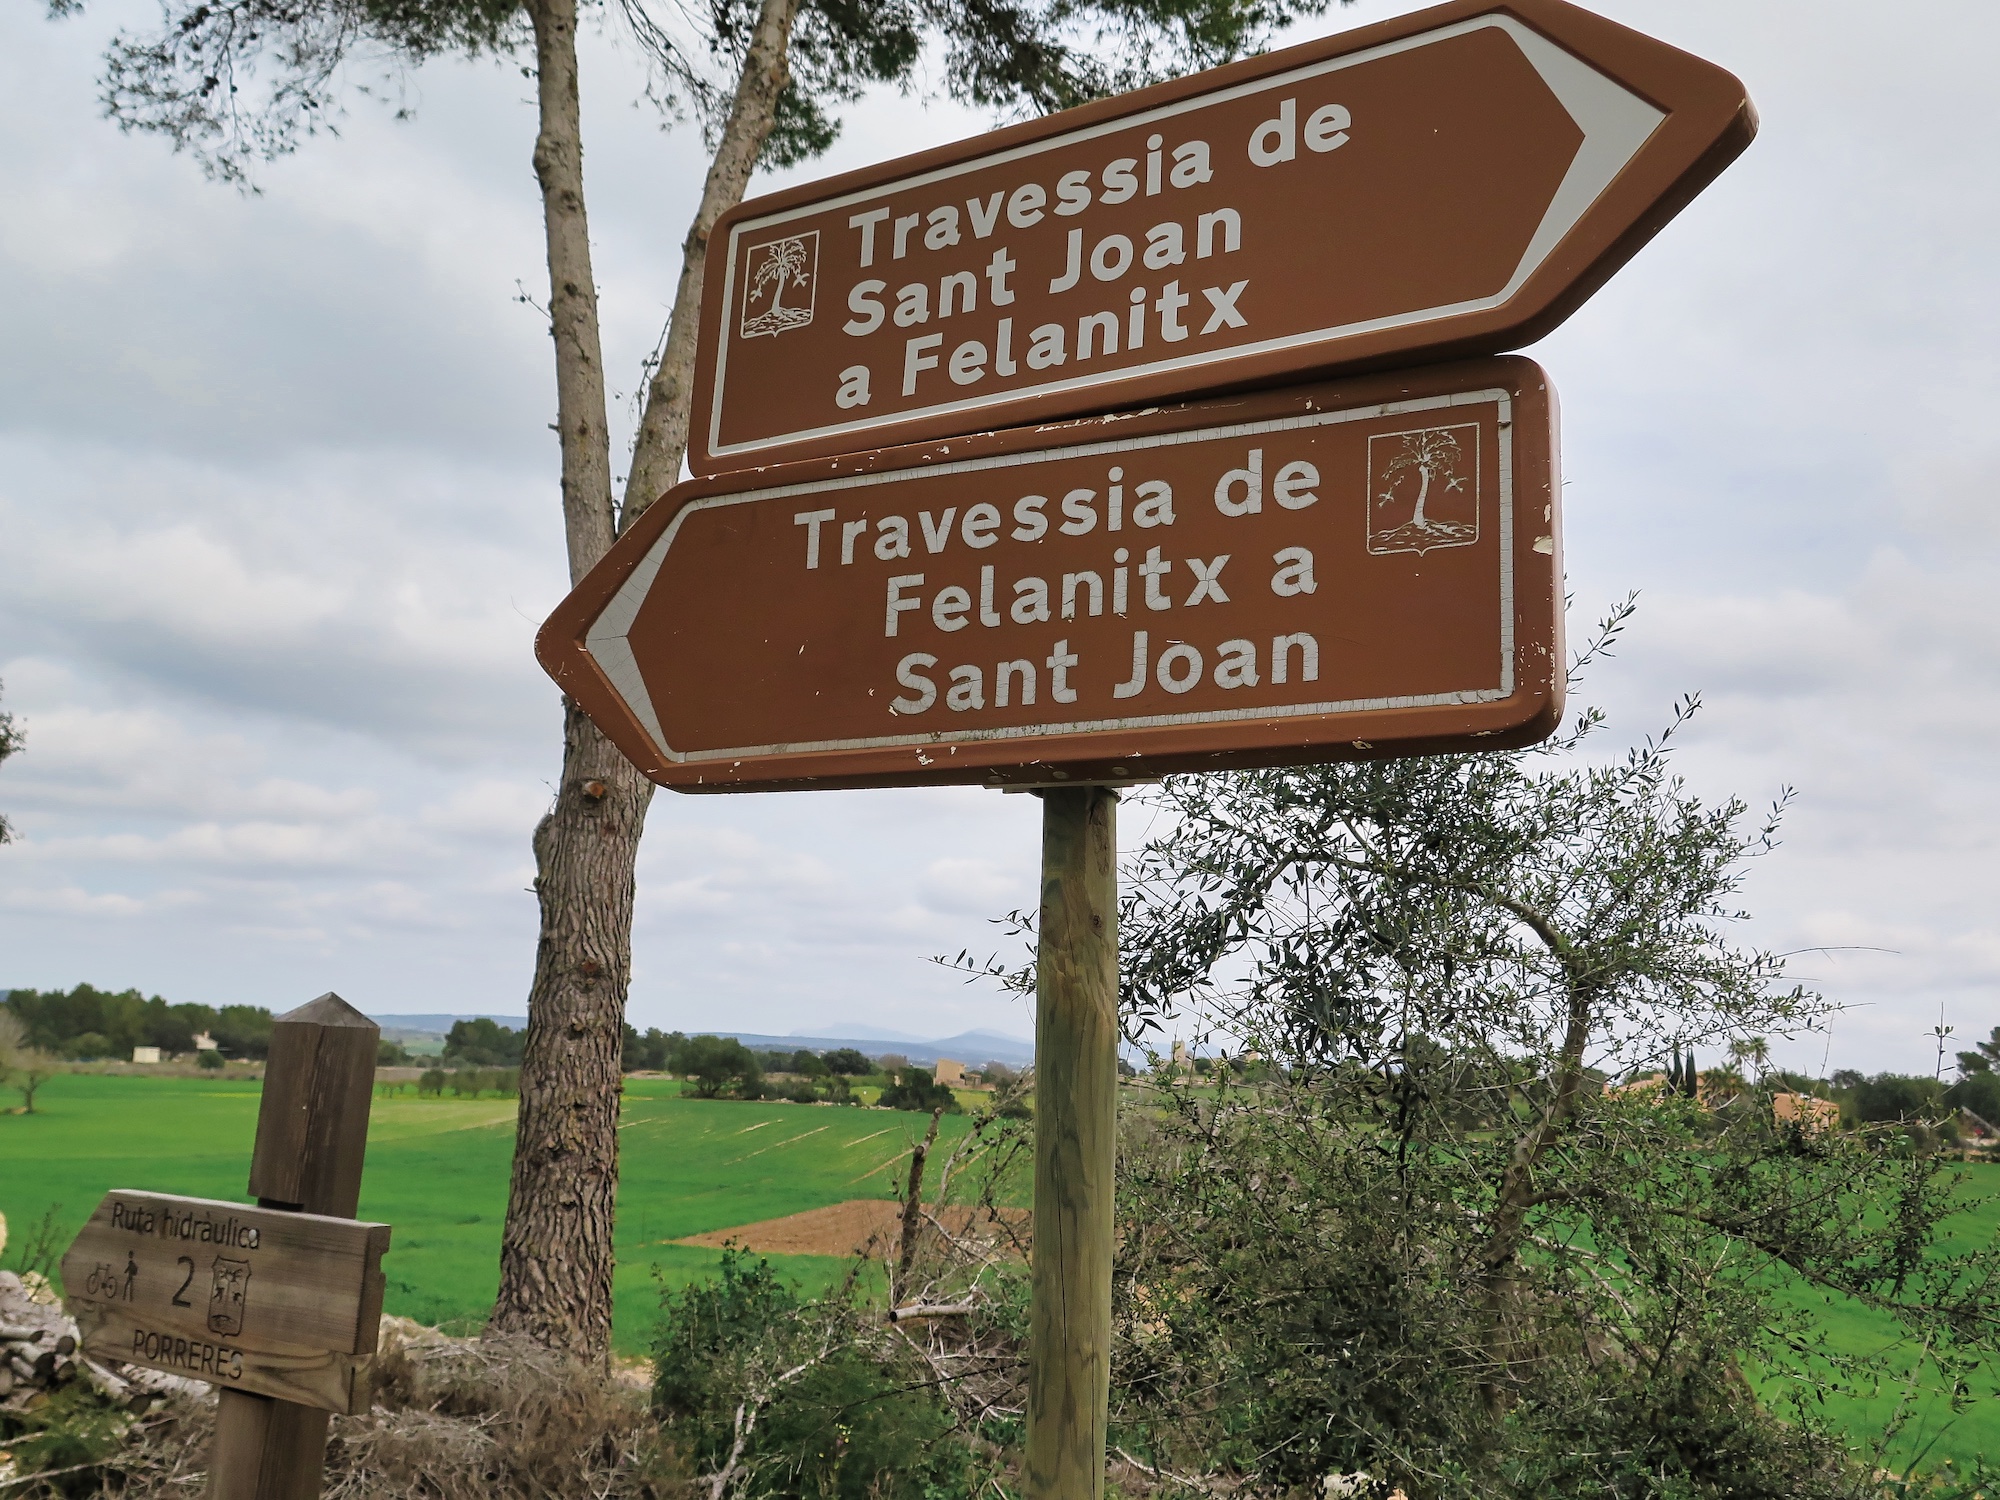 Camí de Sant Joan a Felanitx